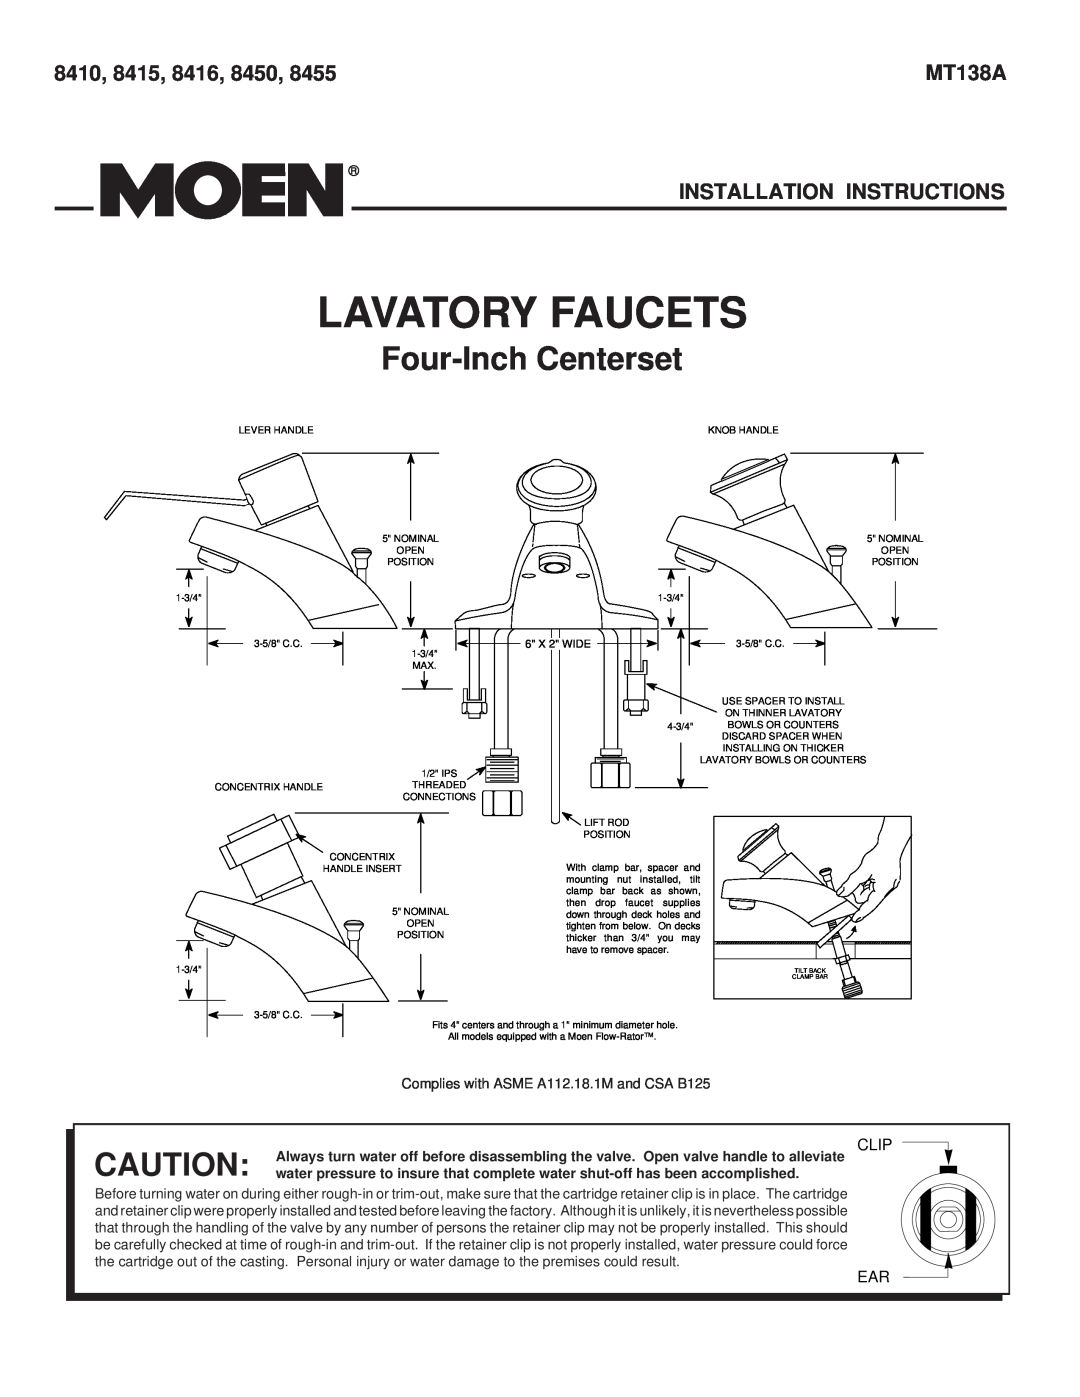 Moen MT138A installation instructions Four-InchCenterset, 8410, Installation Instructions, Lavatory Faucets, Clip 